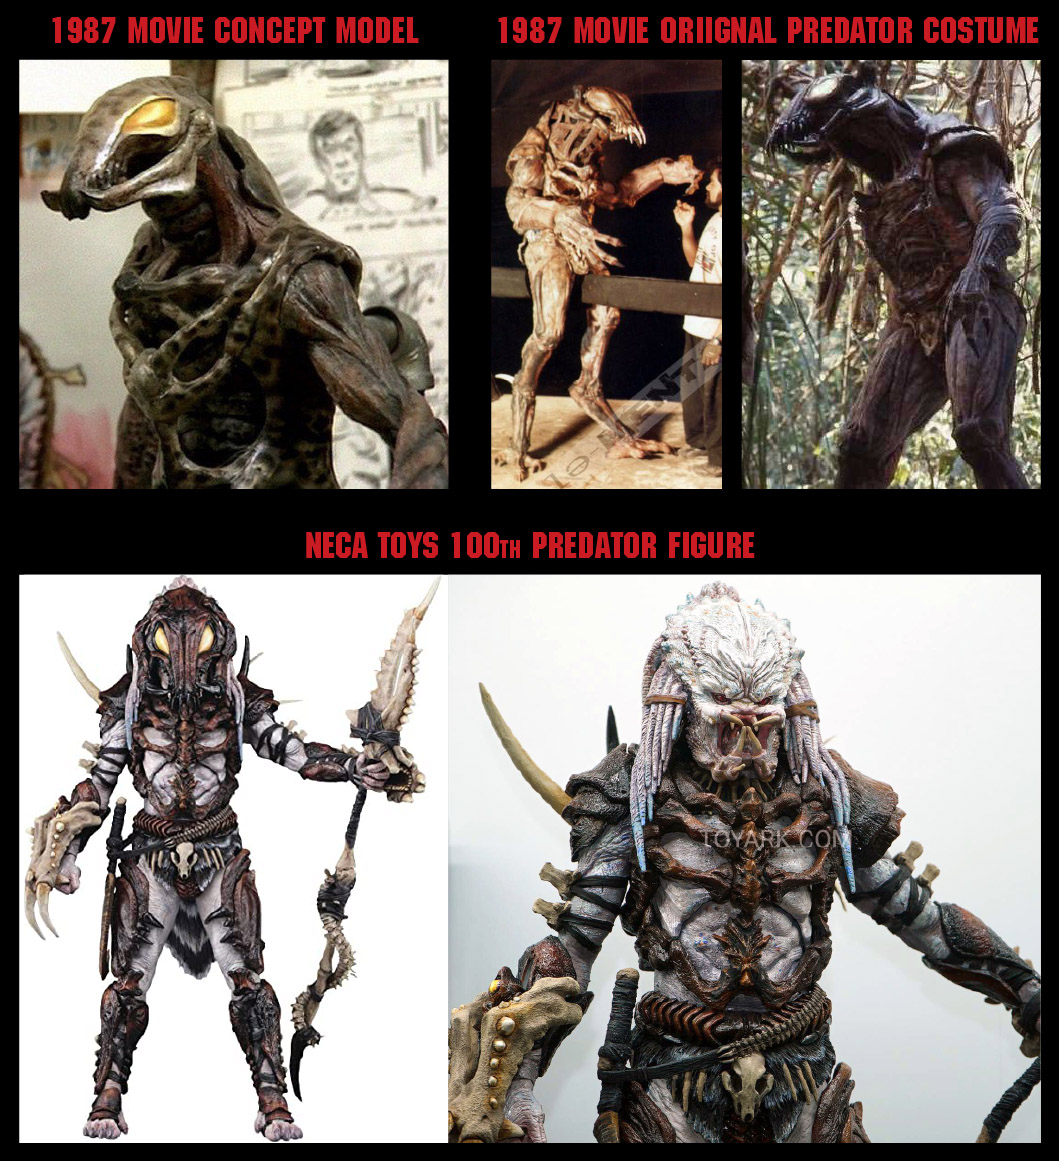 Predator Movie - Making the Predator Behind-the-Scenes